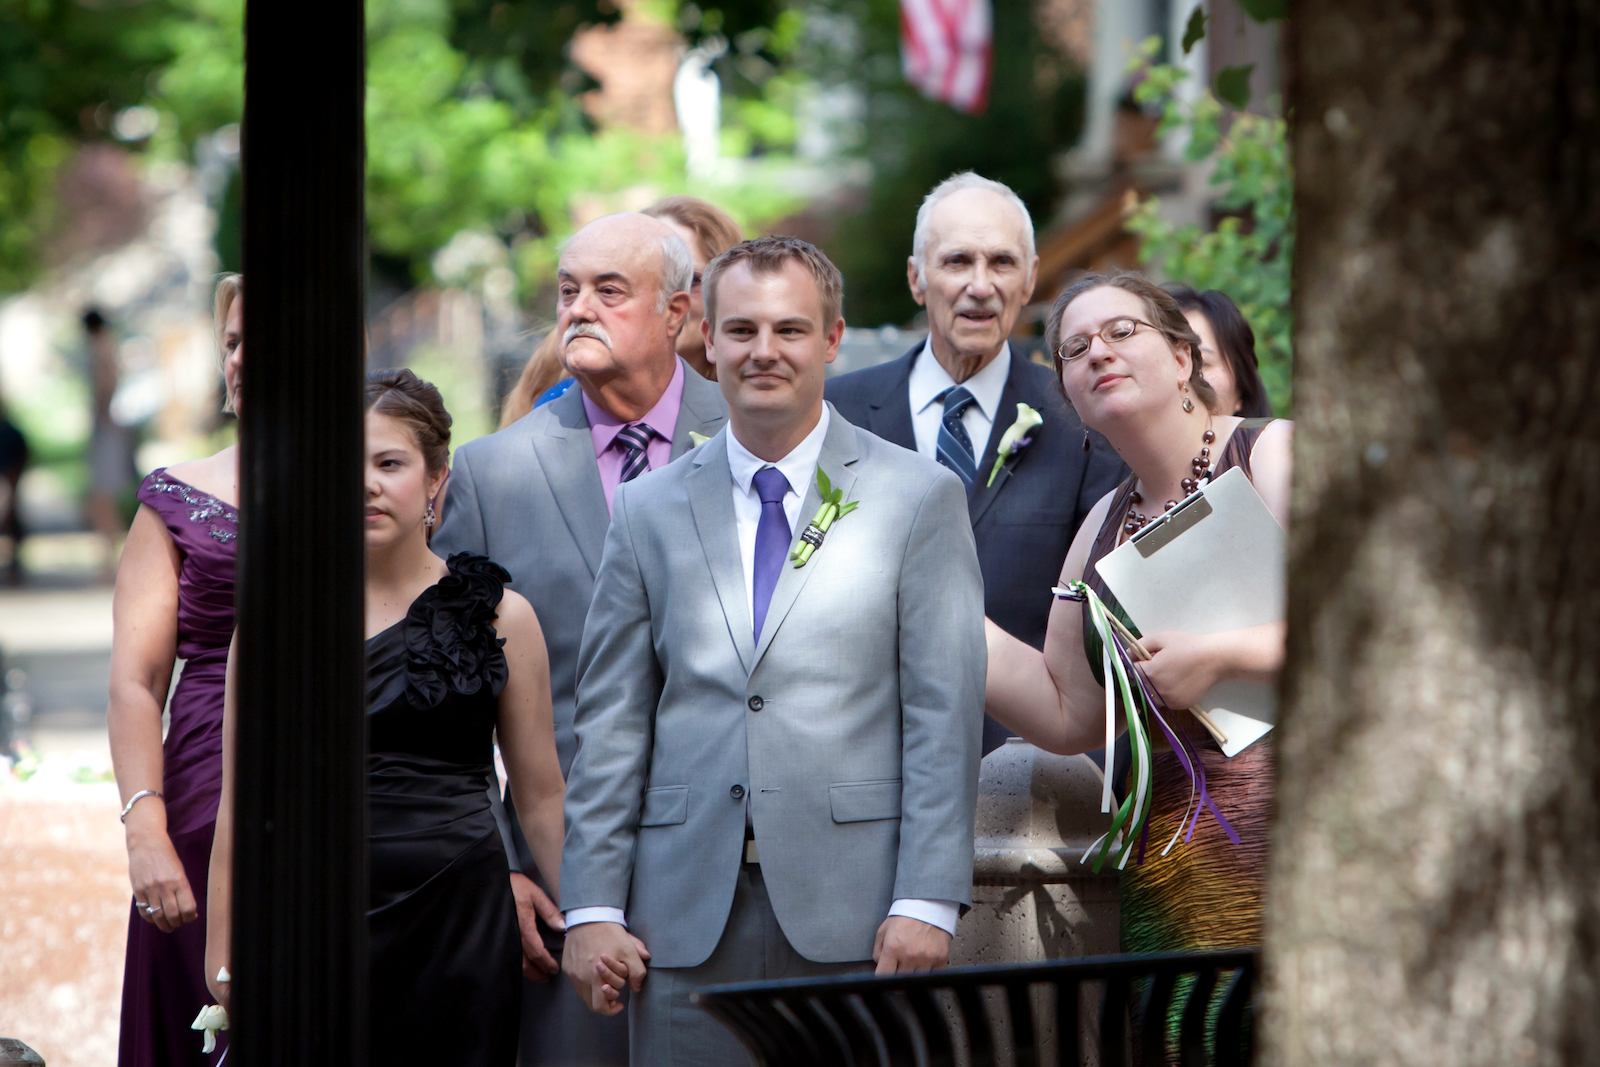 That's me, cueing groom Travis' entrance to his wedding ceremony. Photo © Studio Verite.